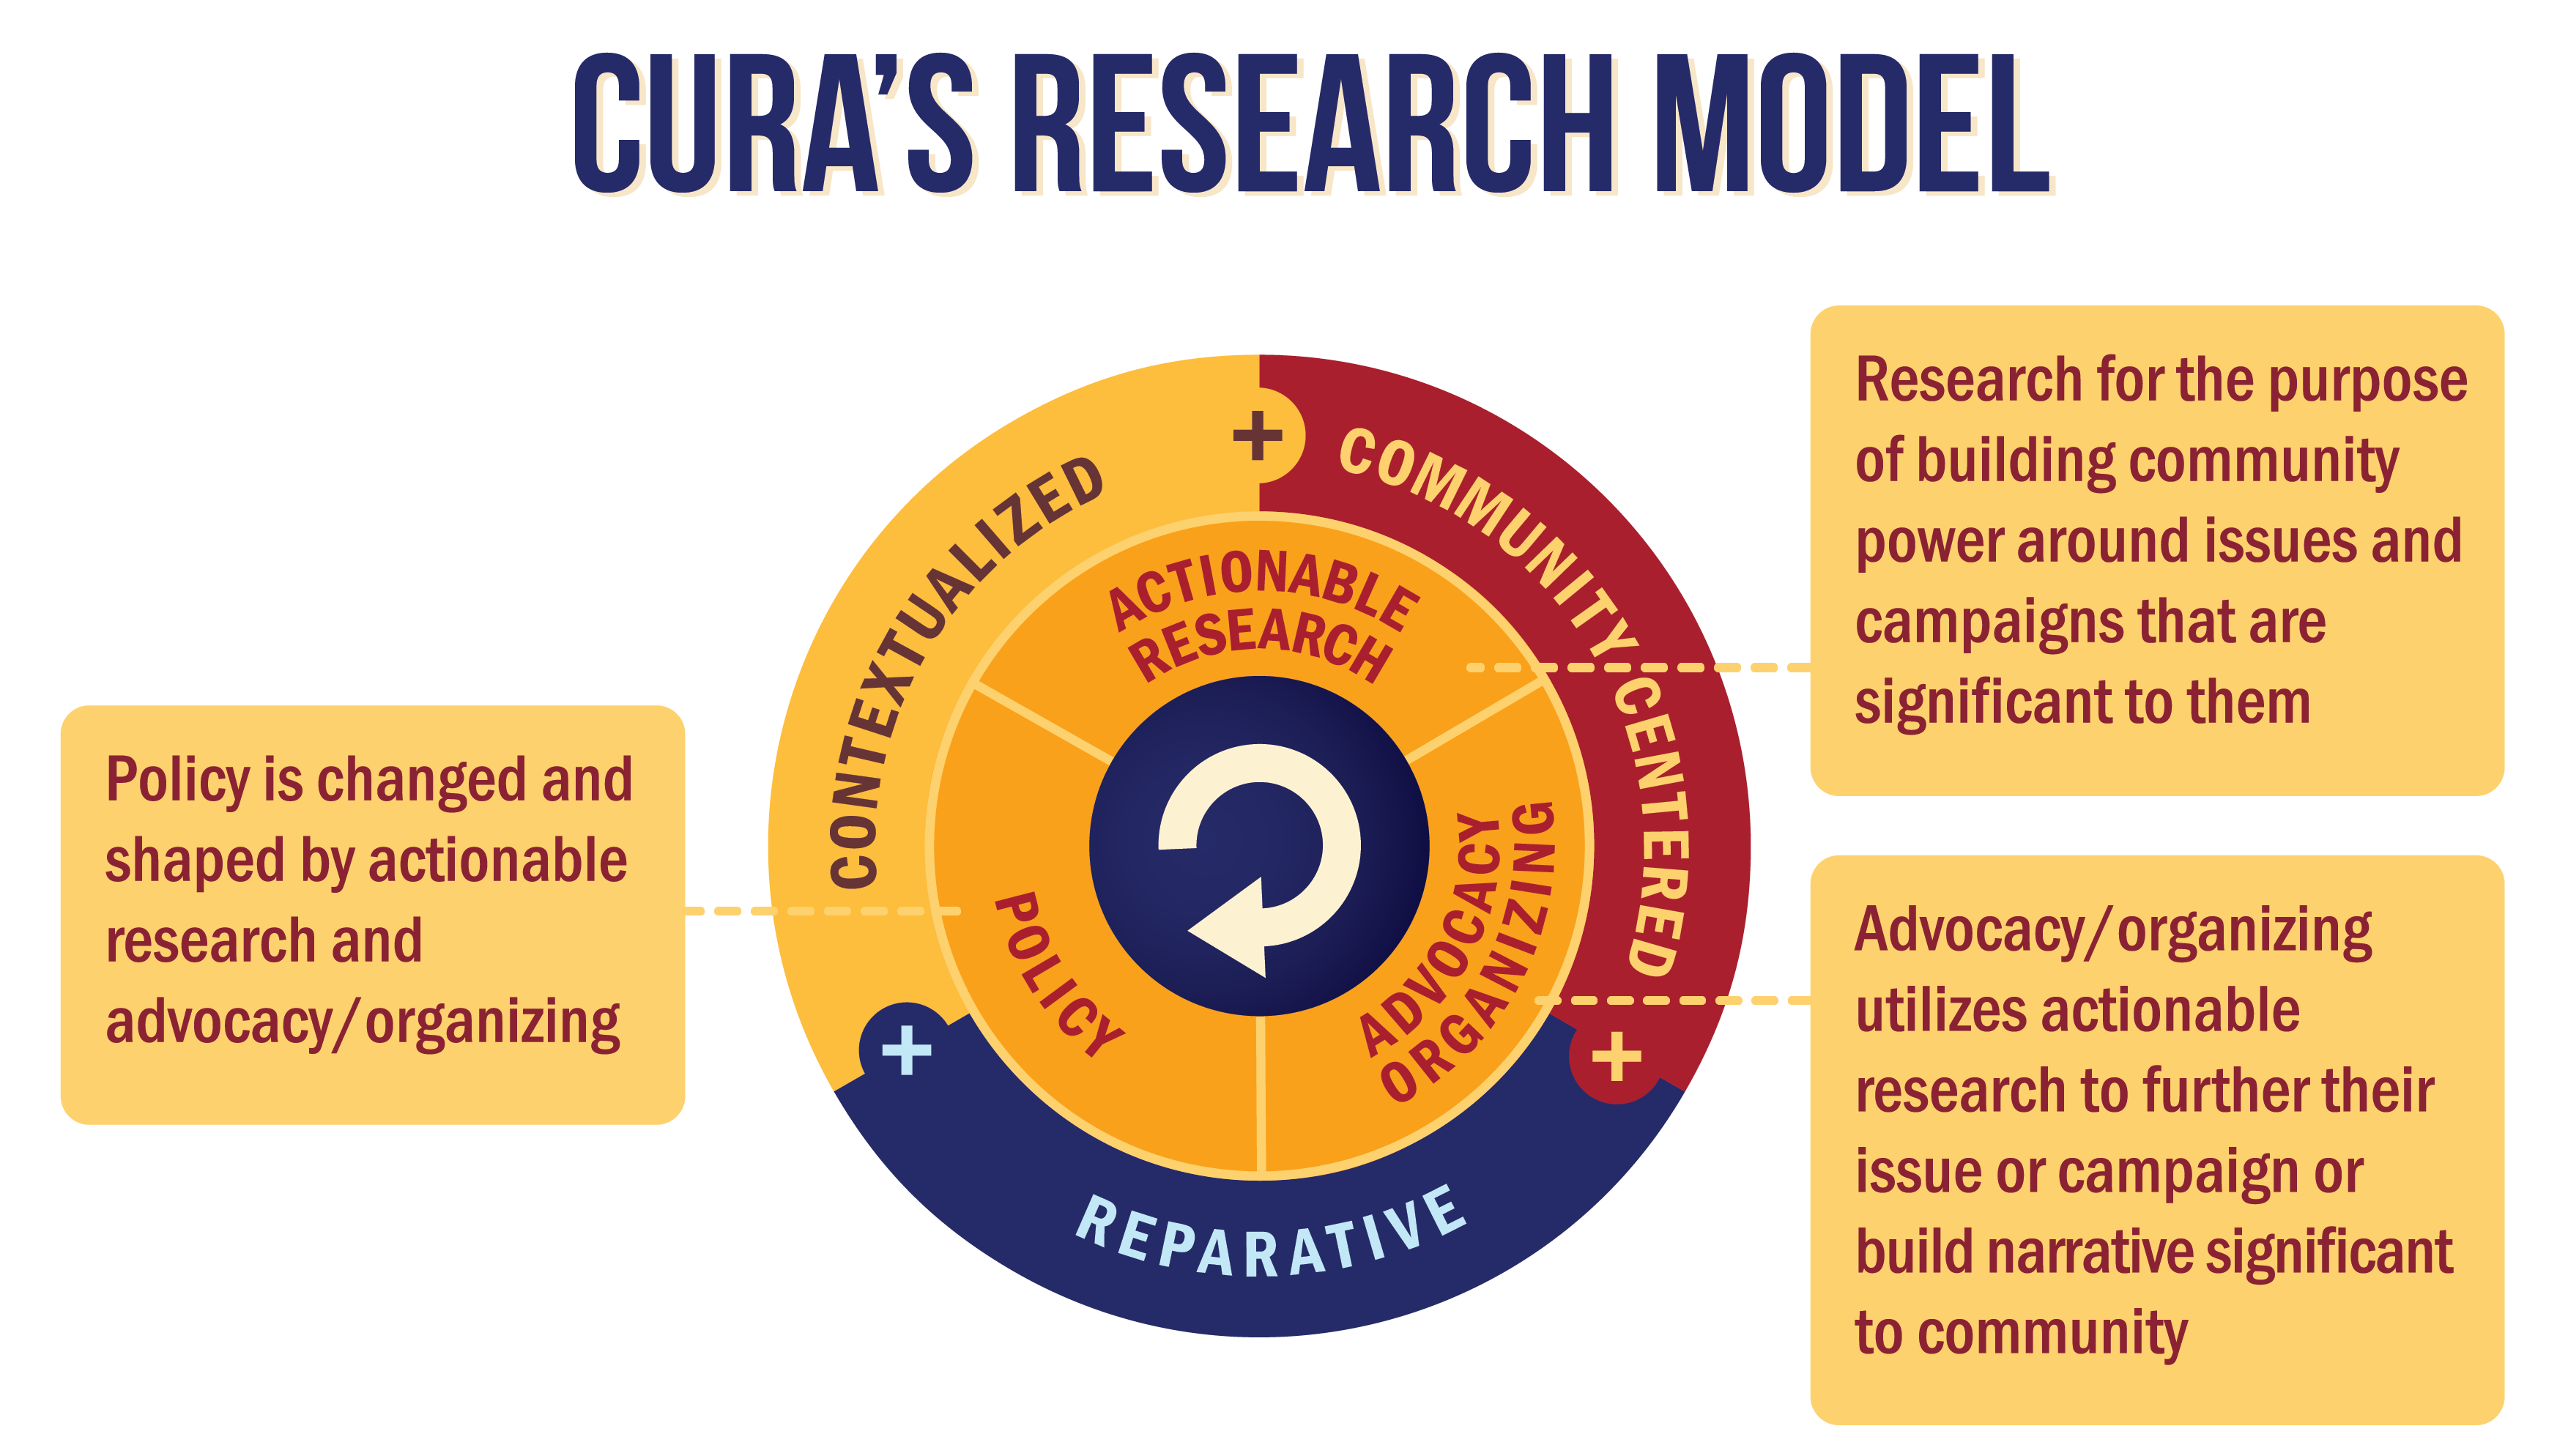 CURA's Research Model